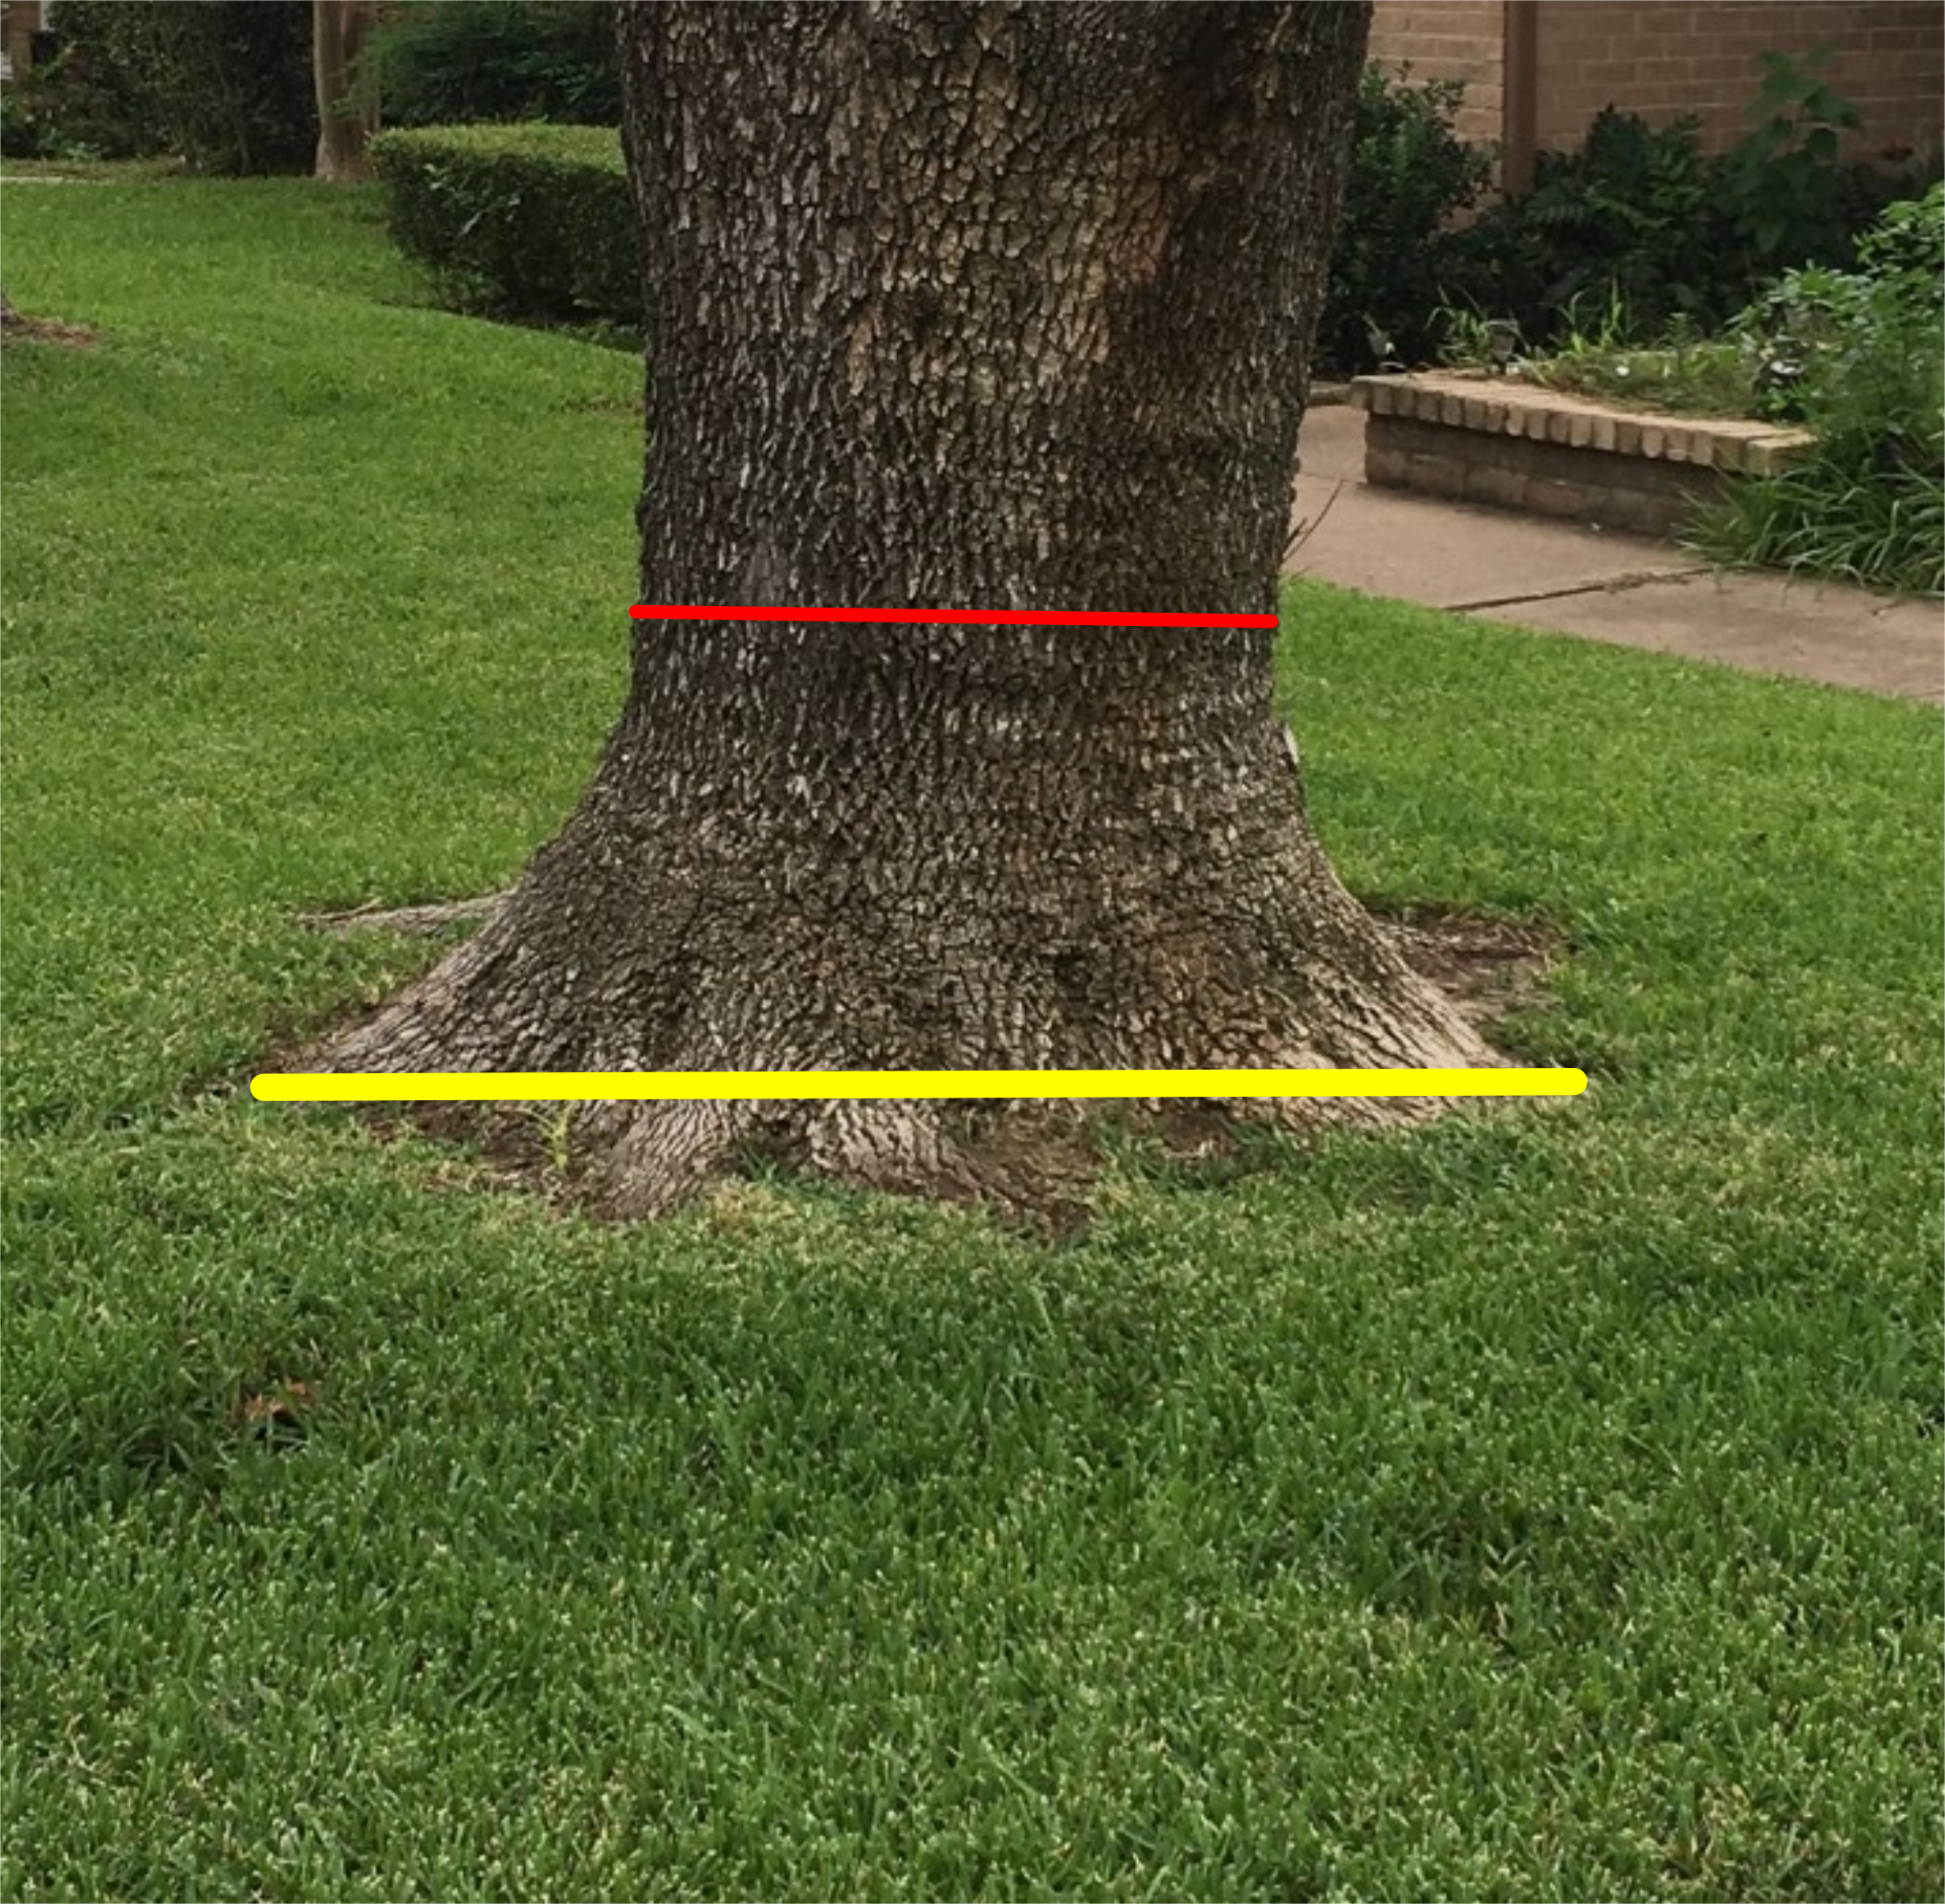 Tree showing proper stump measuring guidelines